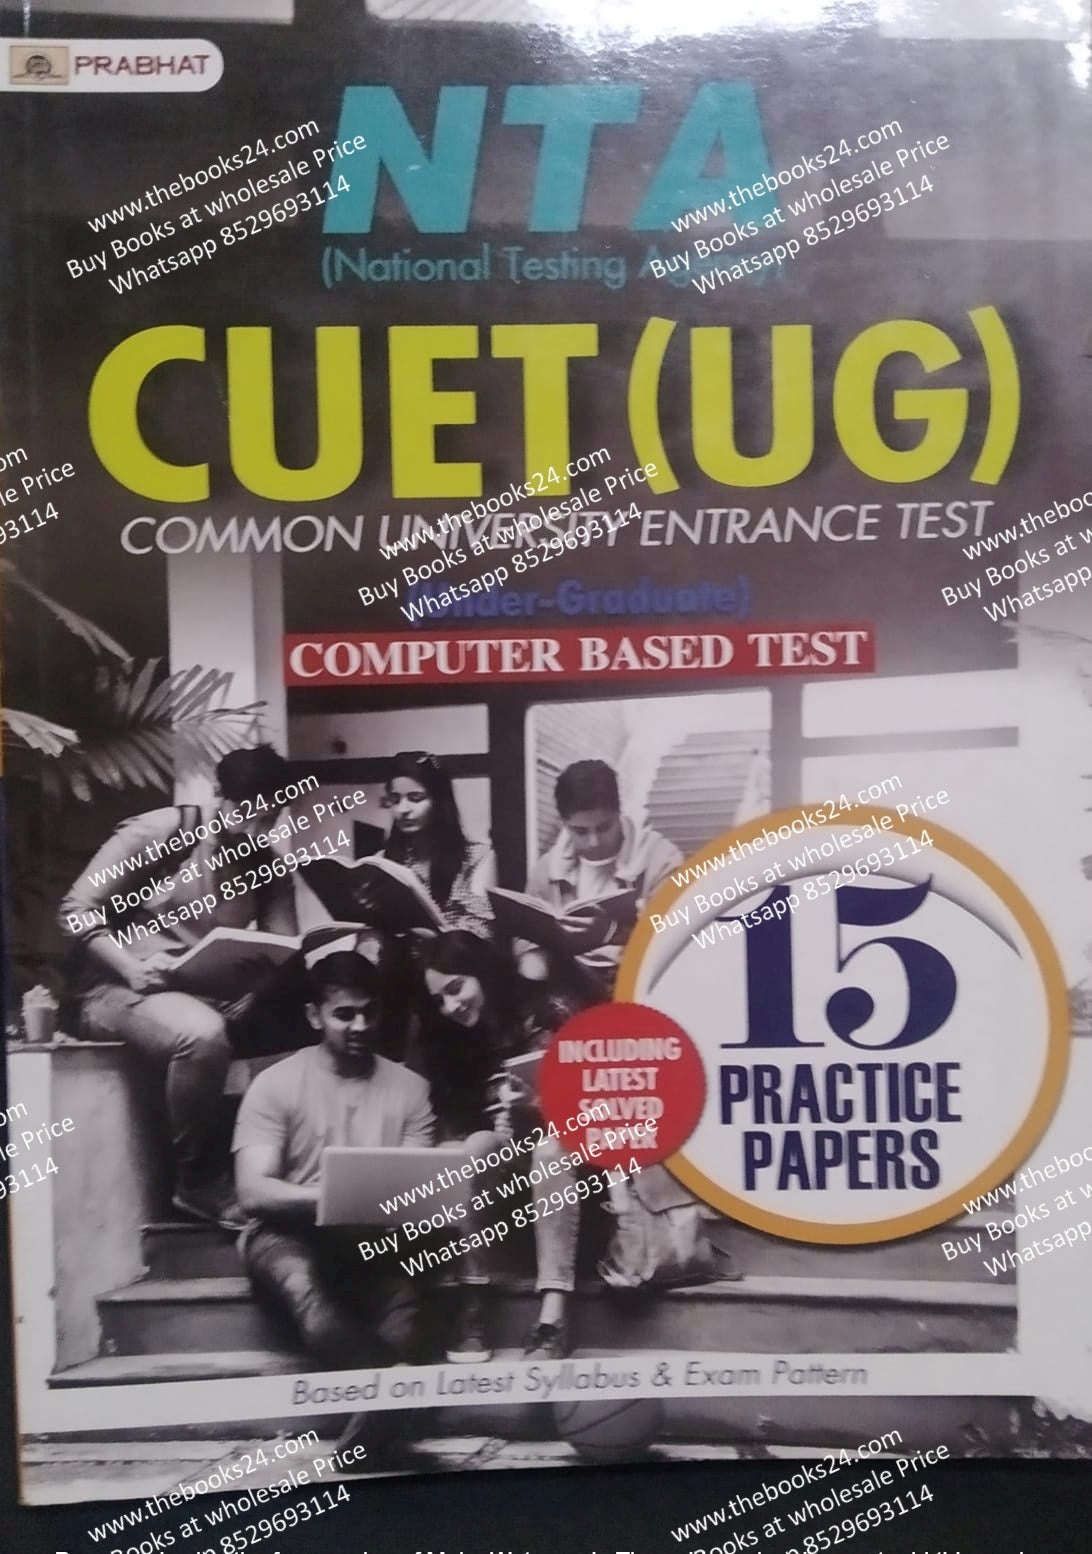 NTA CUET (UG) Under-Graduate Computer Based Test 15 Practice Papers